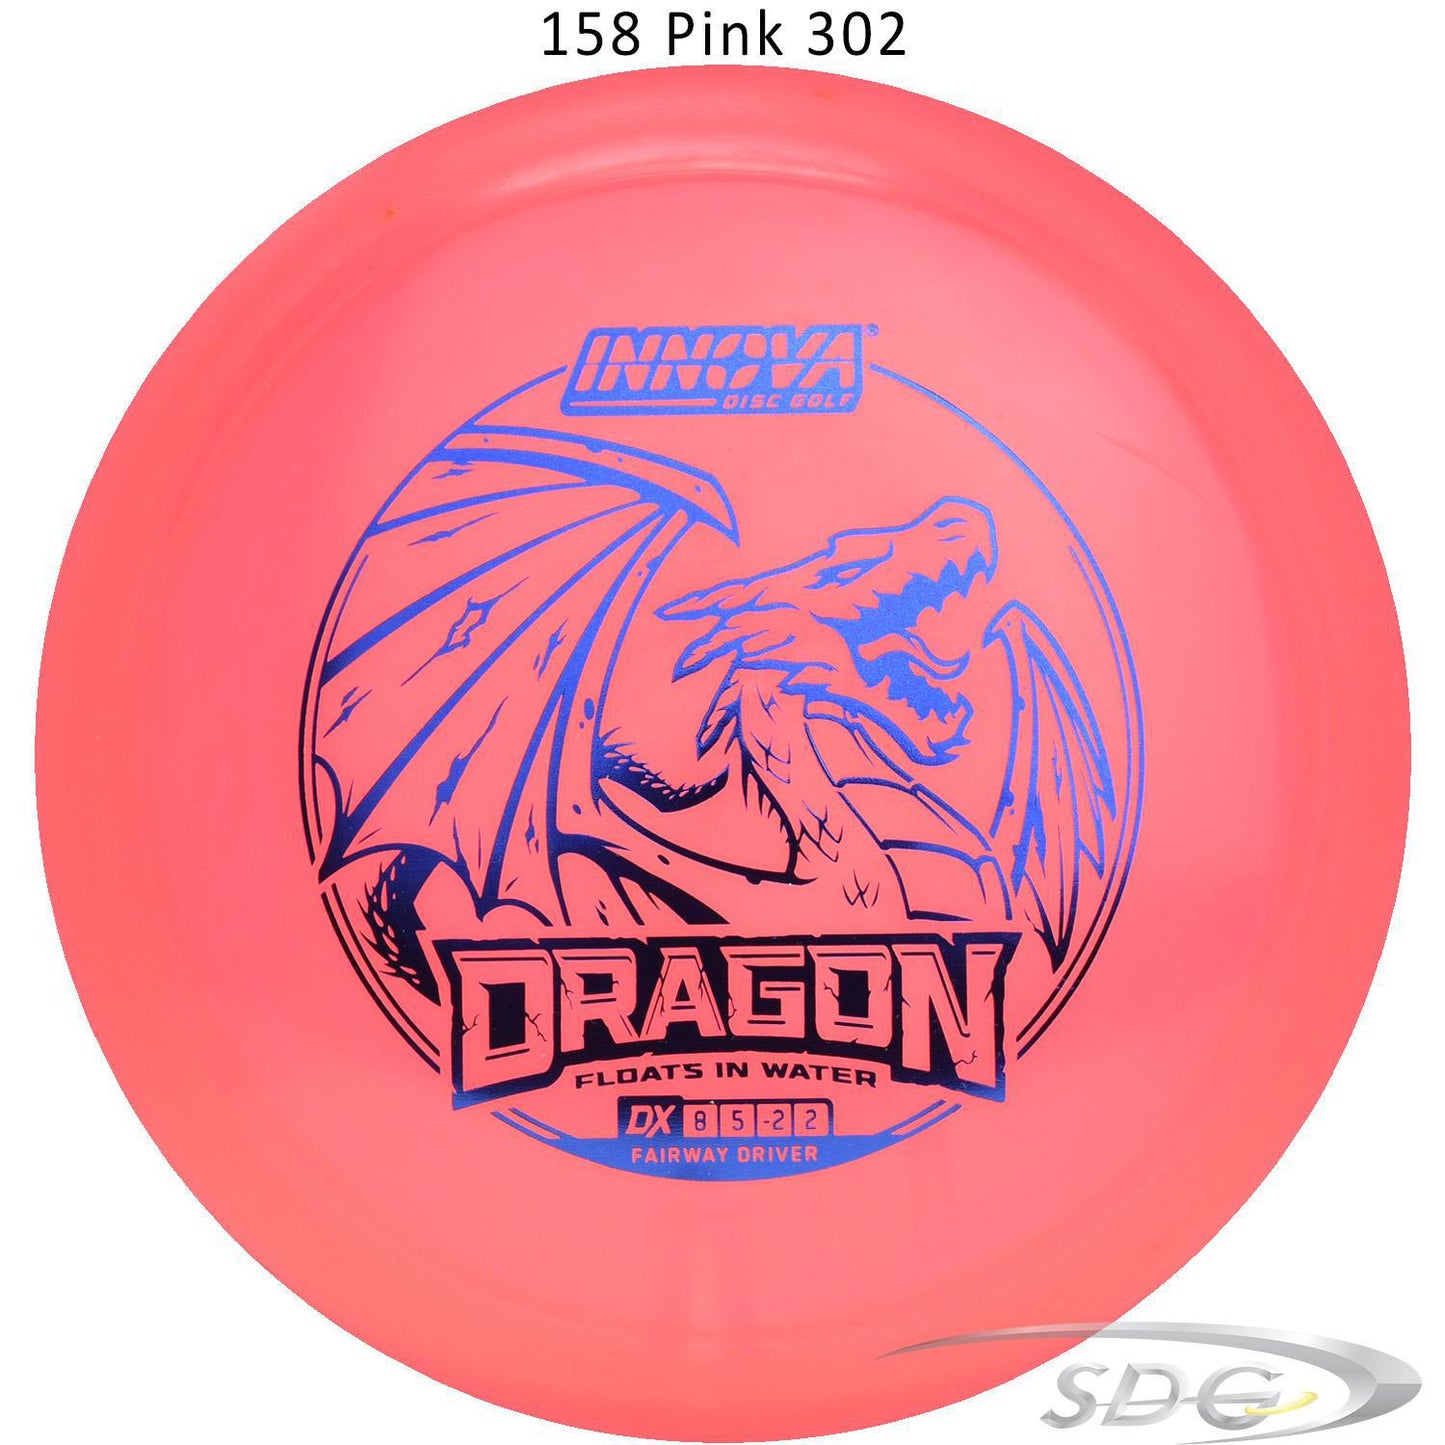 innova-dx-dragon-disc-golf-fairway-driver 158 Pink 302 